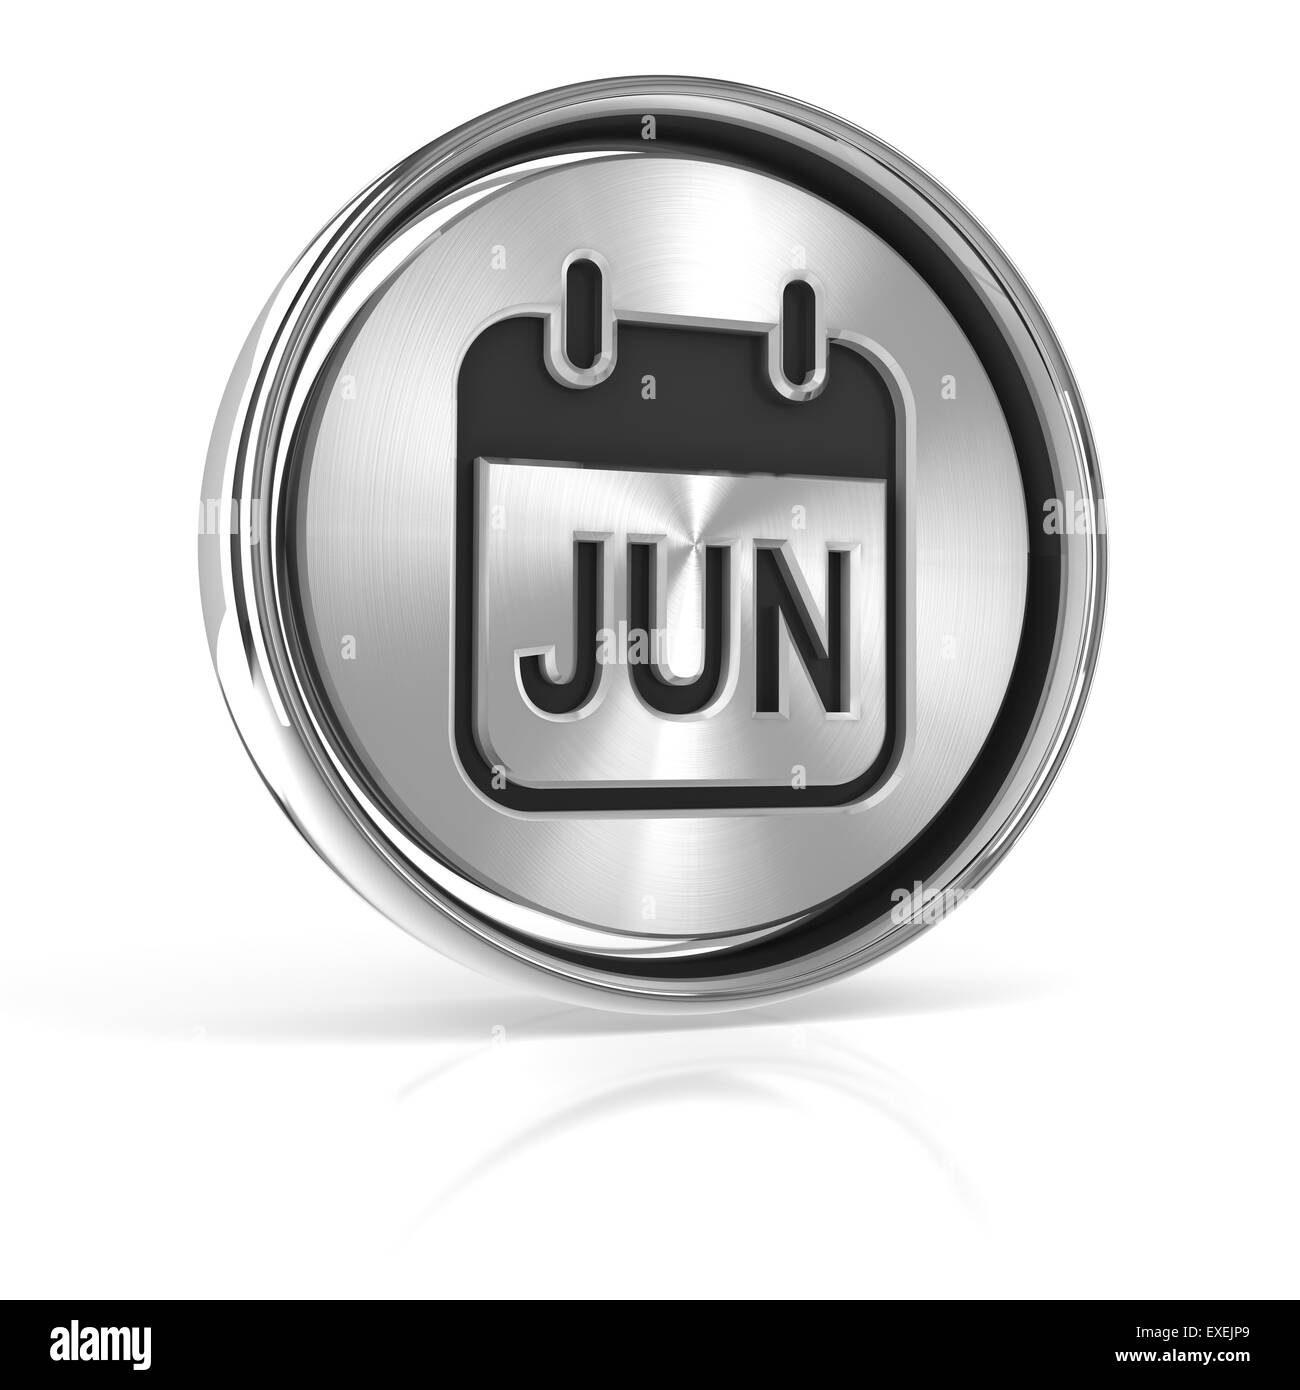 Metallic June calendar icon Stock Photo